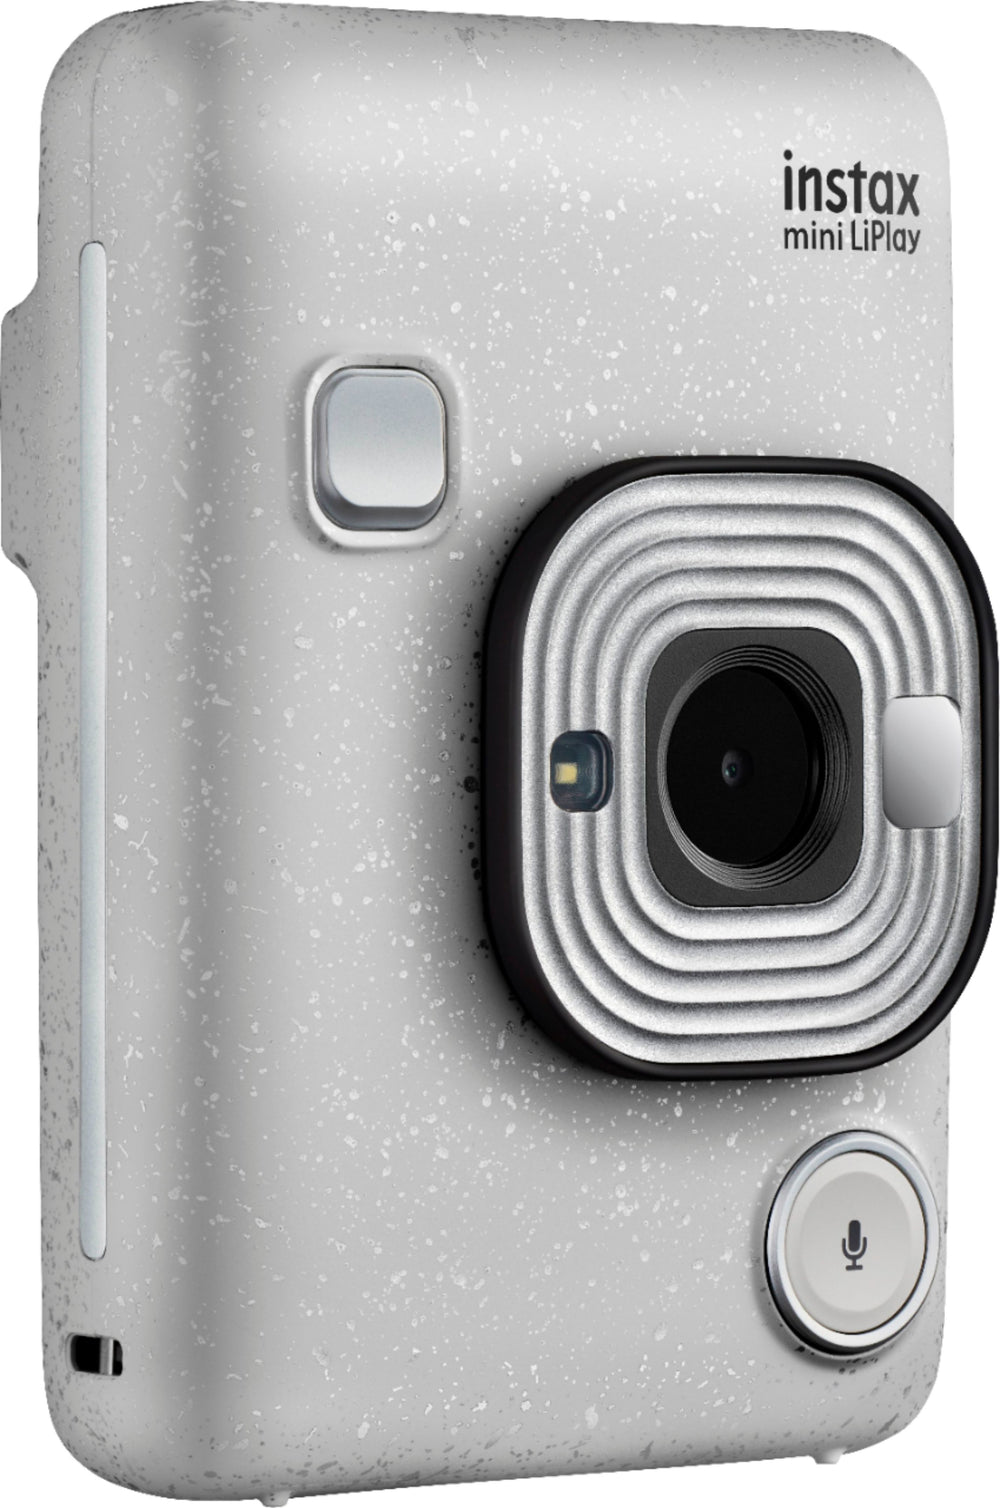 Fujifilm - instax mini LiPlay Instant Film Camera - Stone White_1